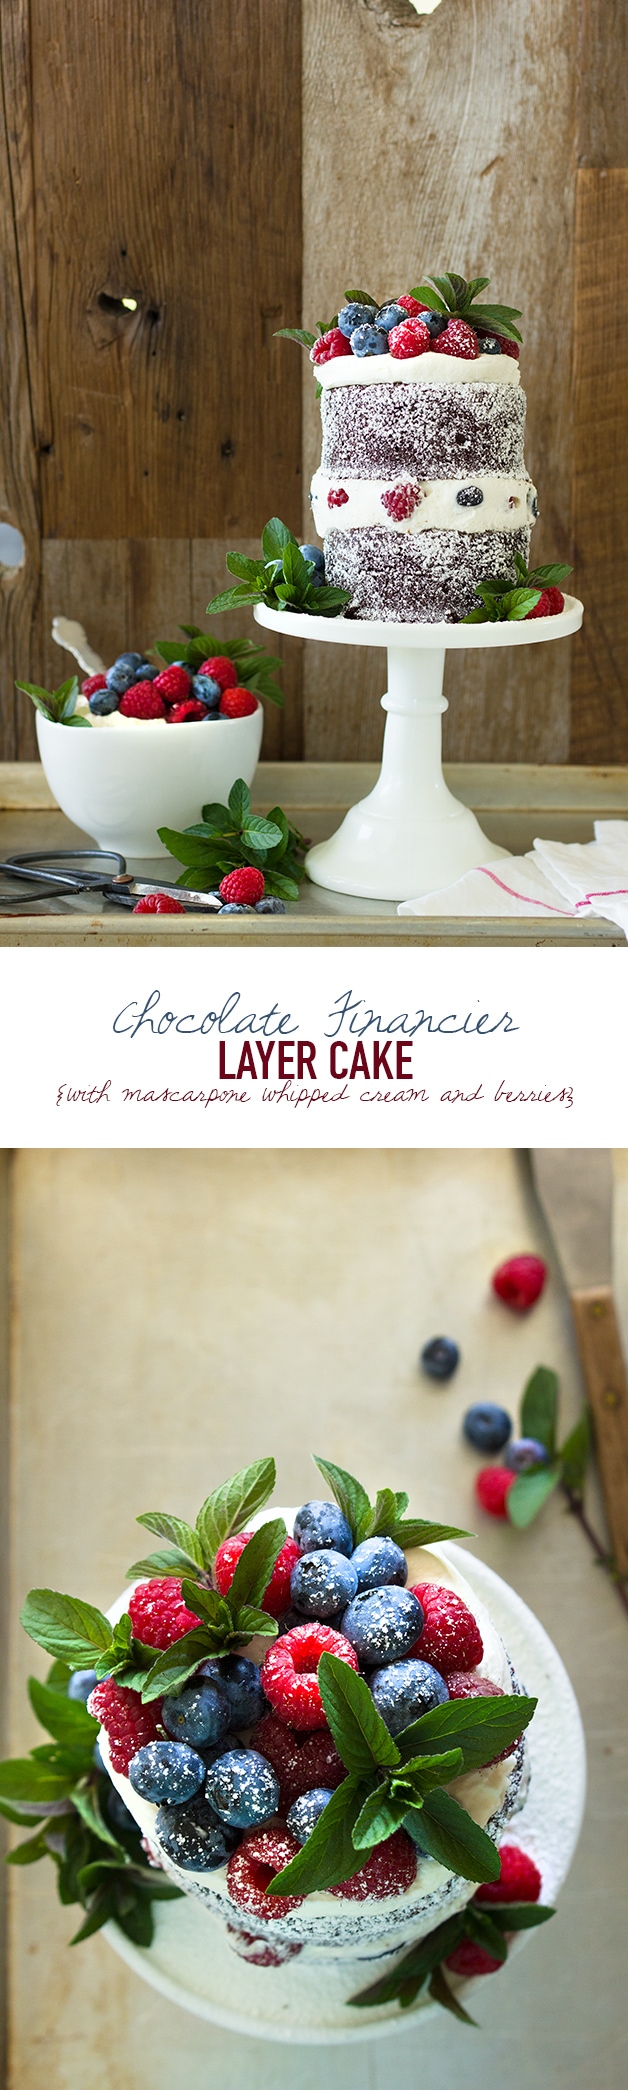 Chocolate Financier Layer Cake with Mascarpone Whipped Cream and Berries {Gluten-Free} | www.brighteyedbaker.com